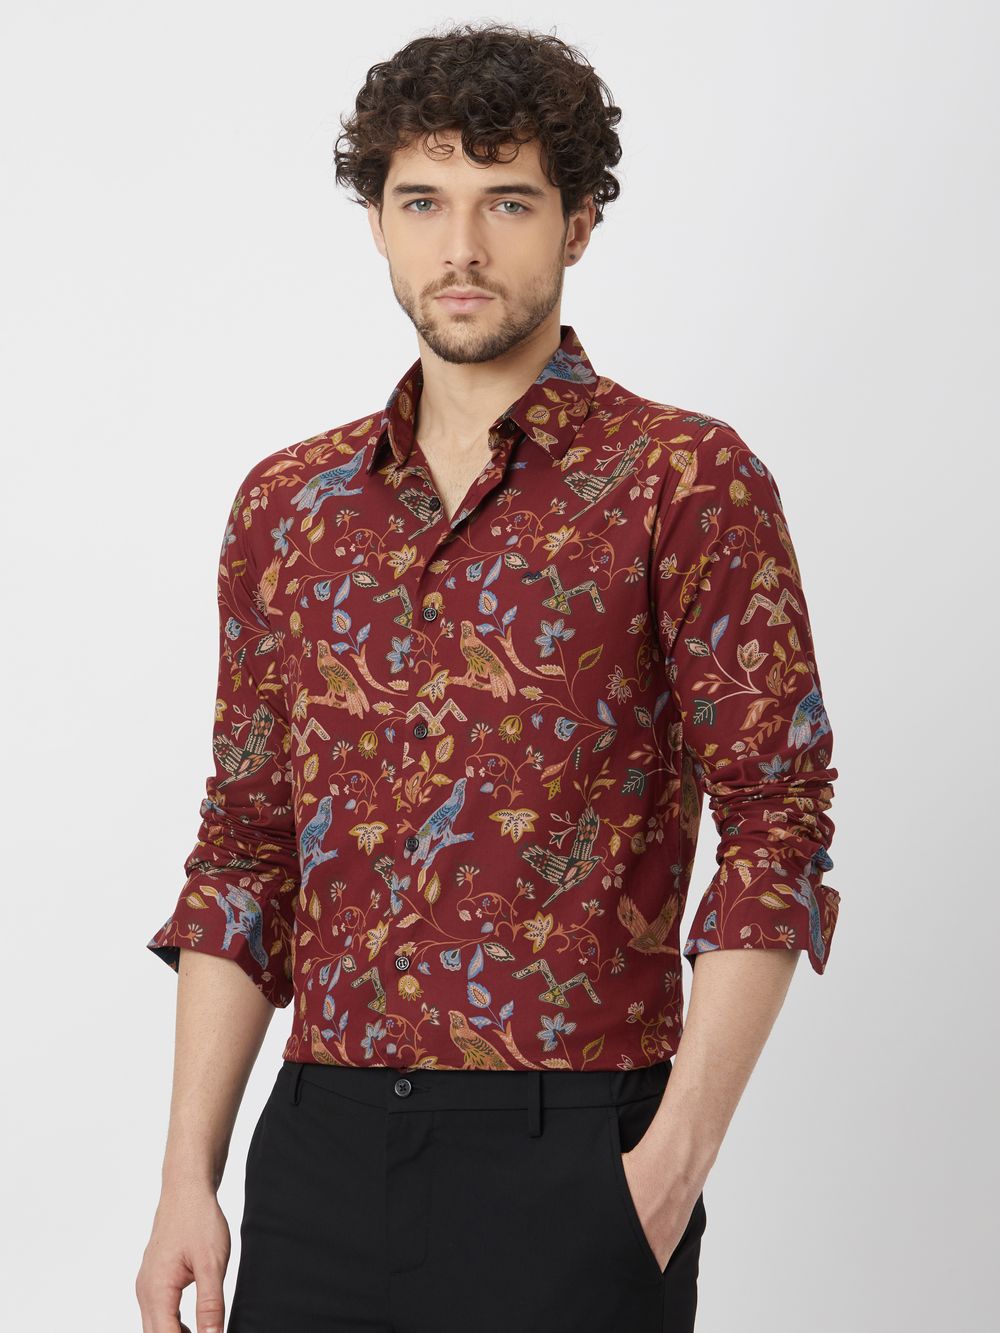 Maroon Floral Print Shirt